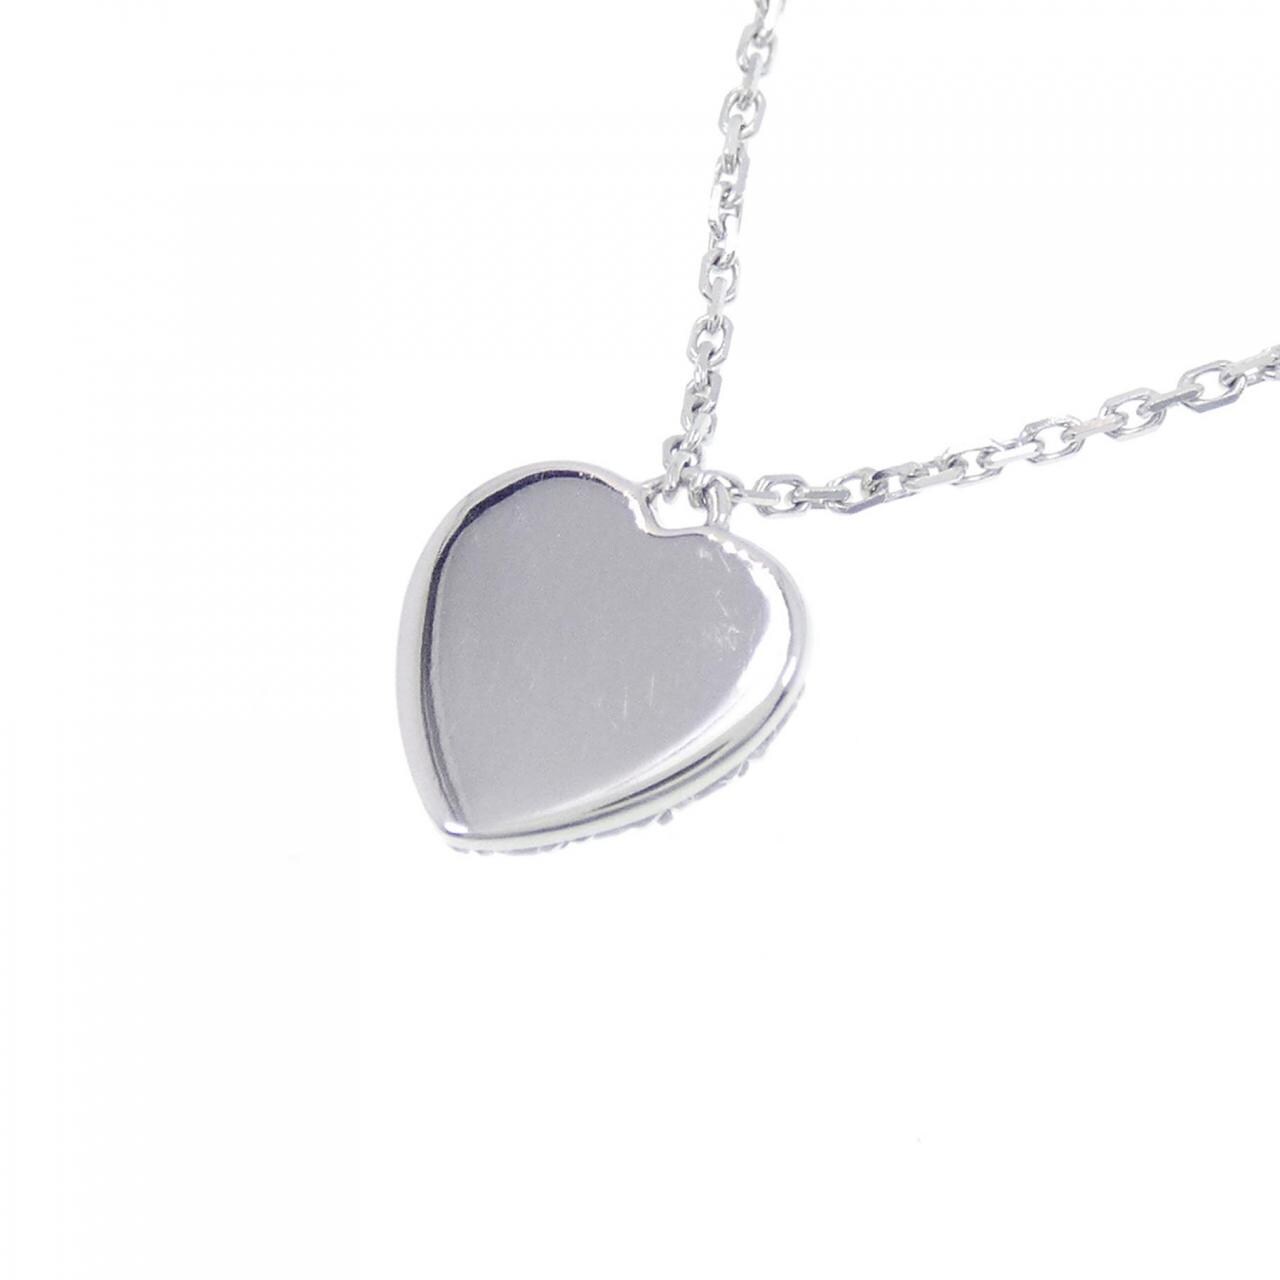 Cartier heart necklace